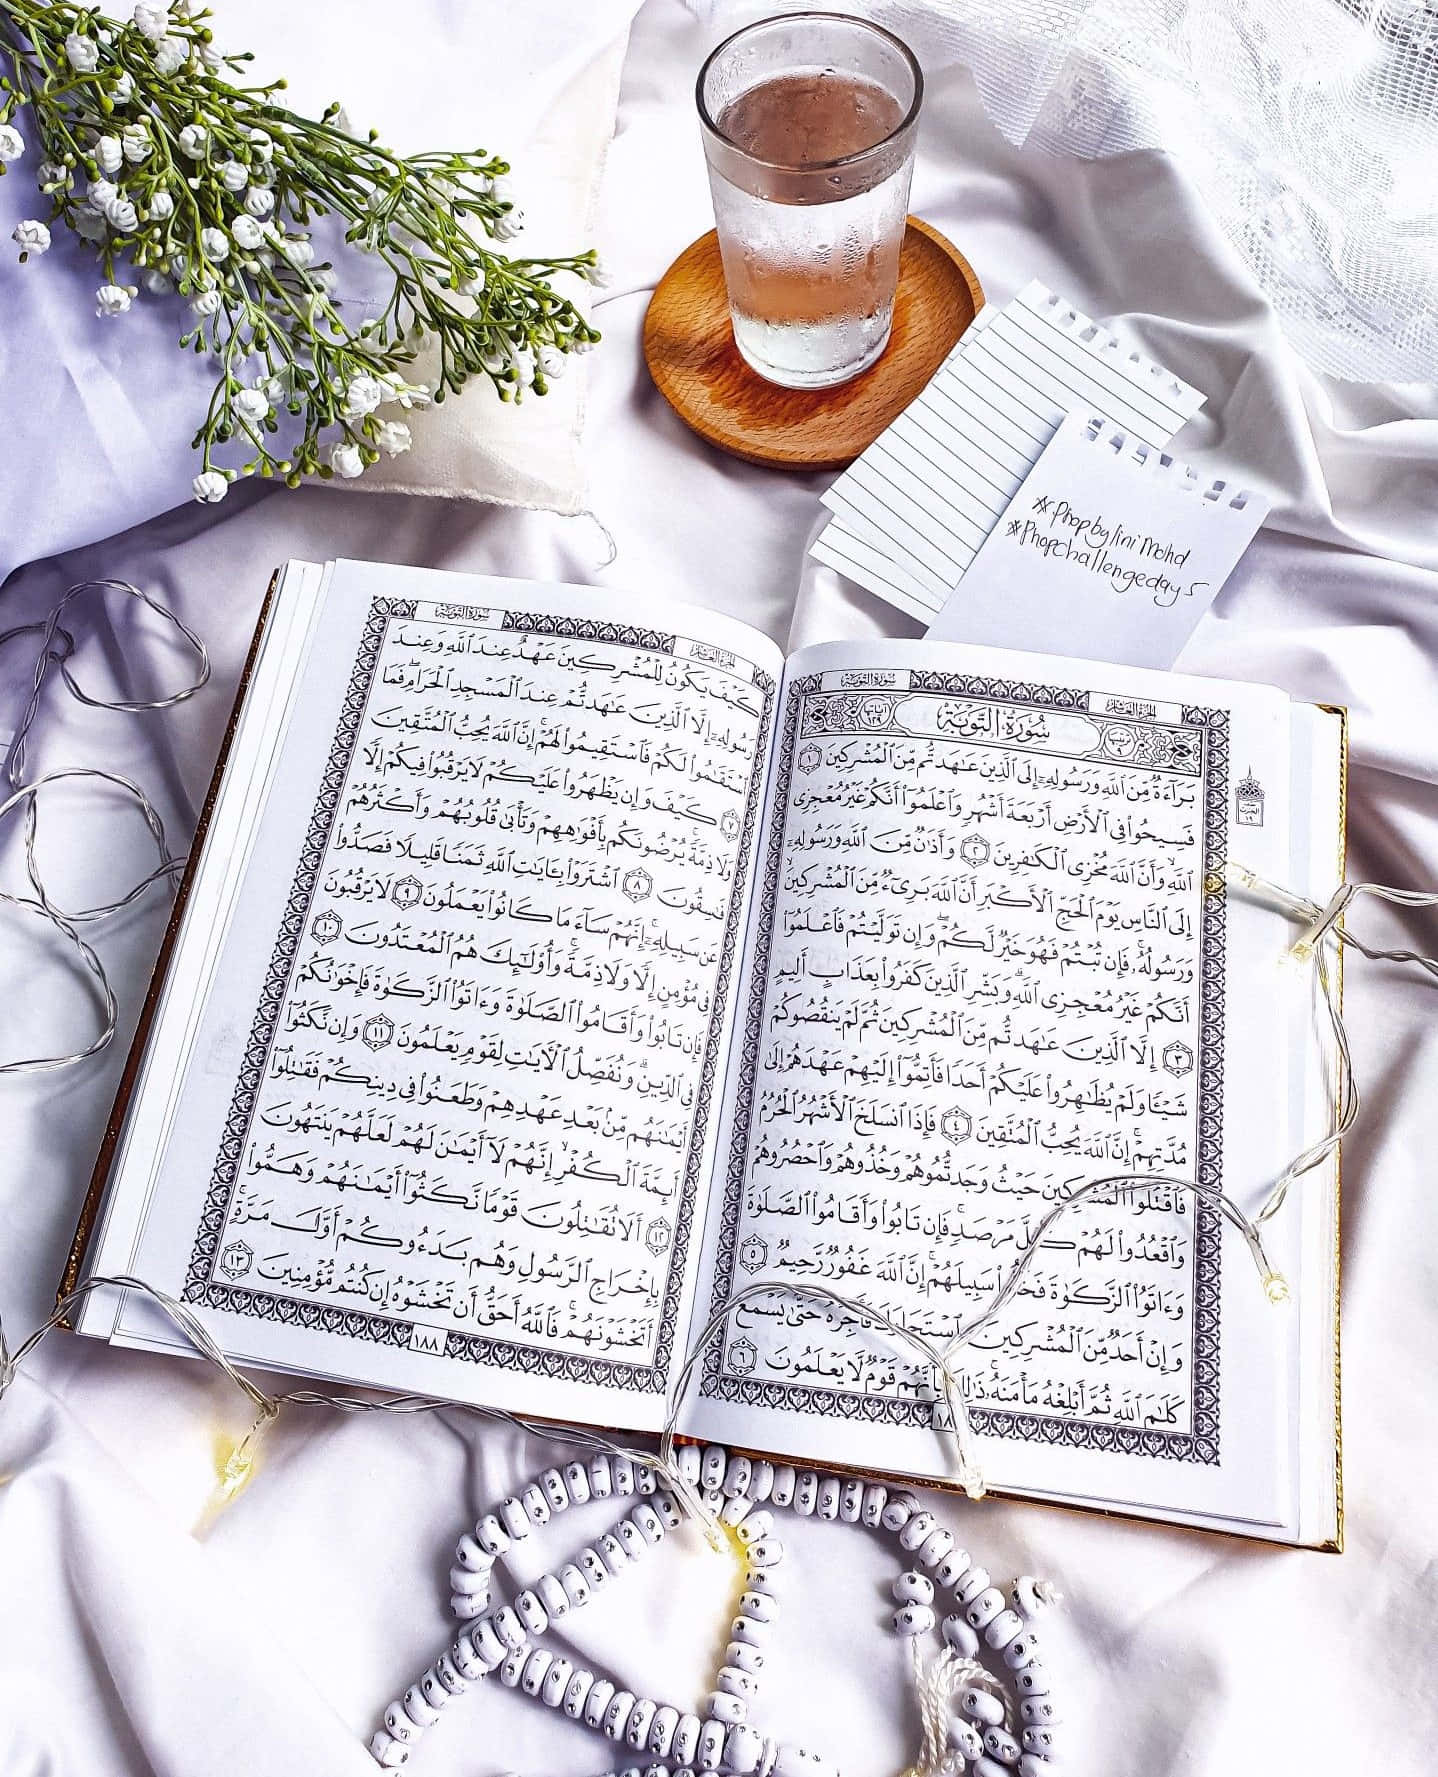 Quran Pictures